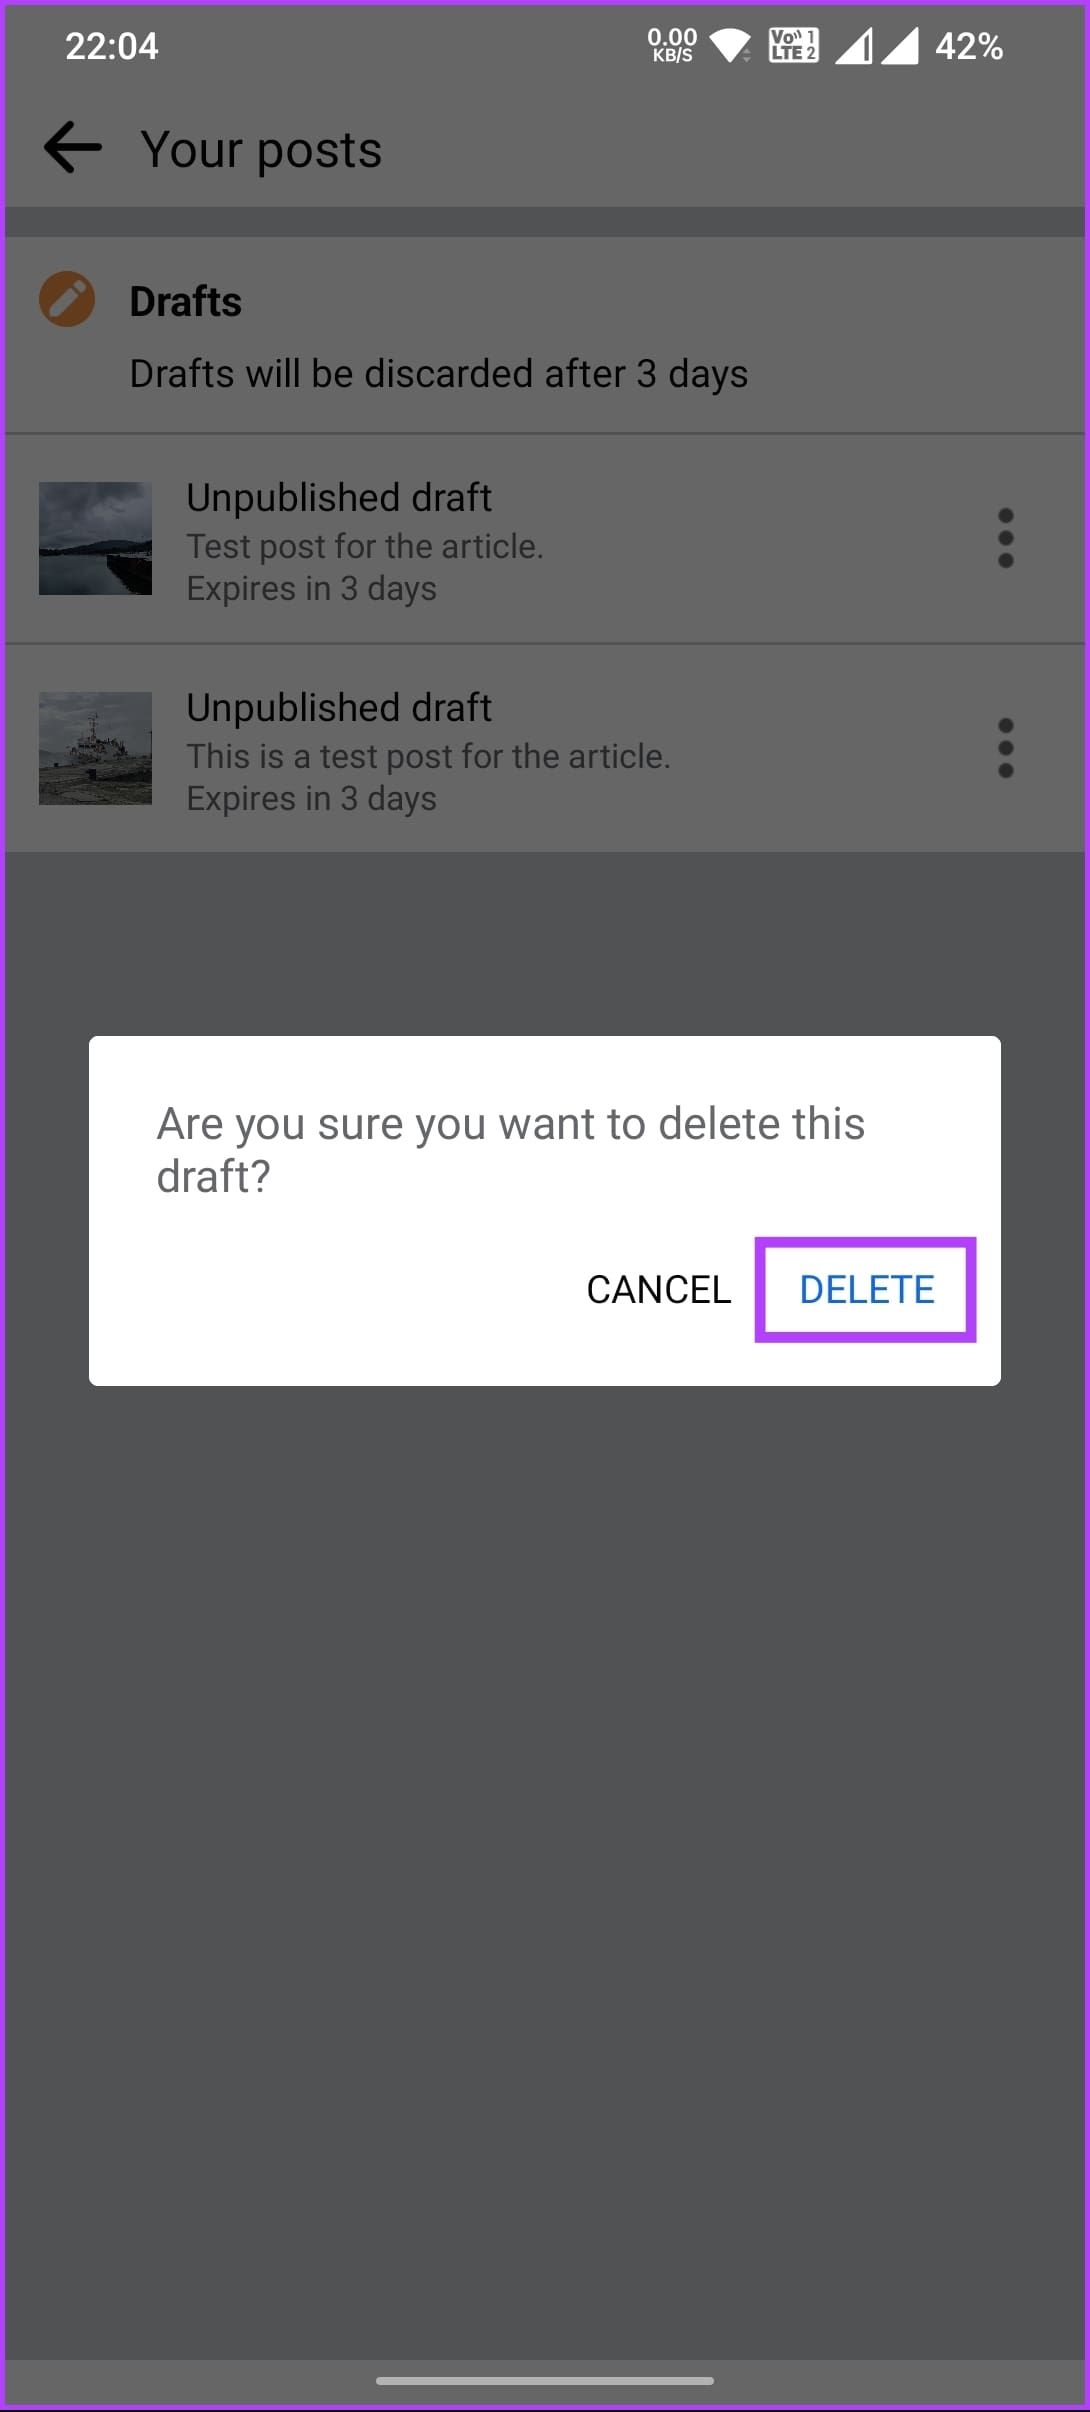 select Delete